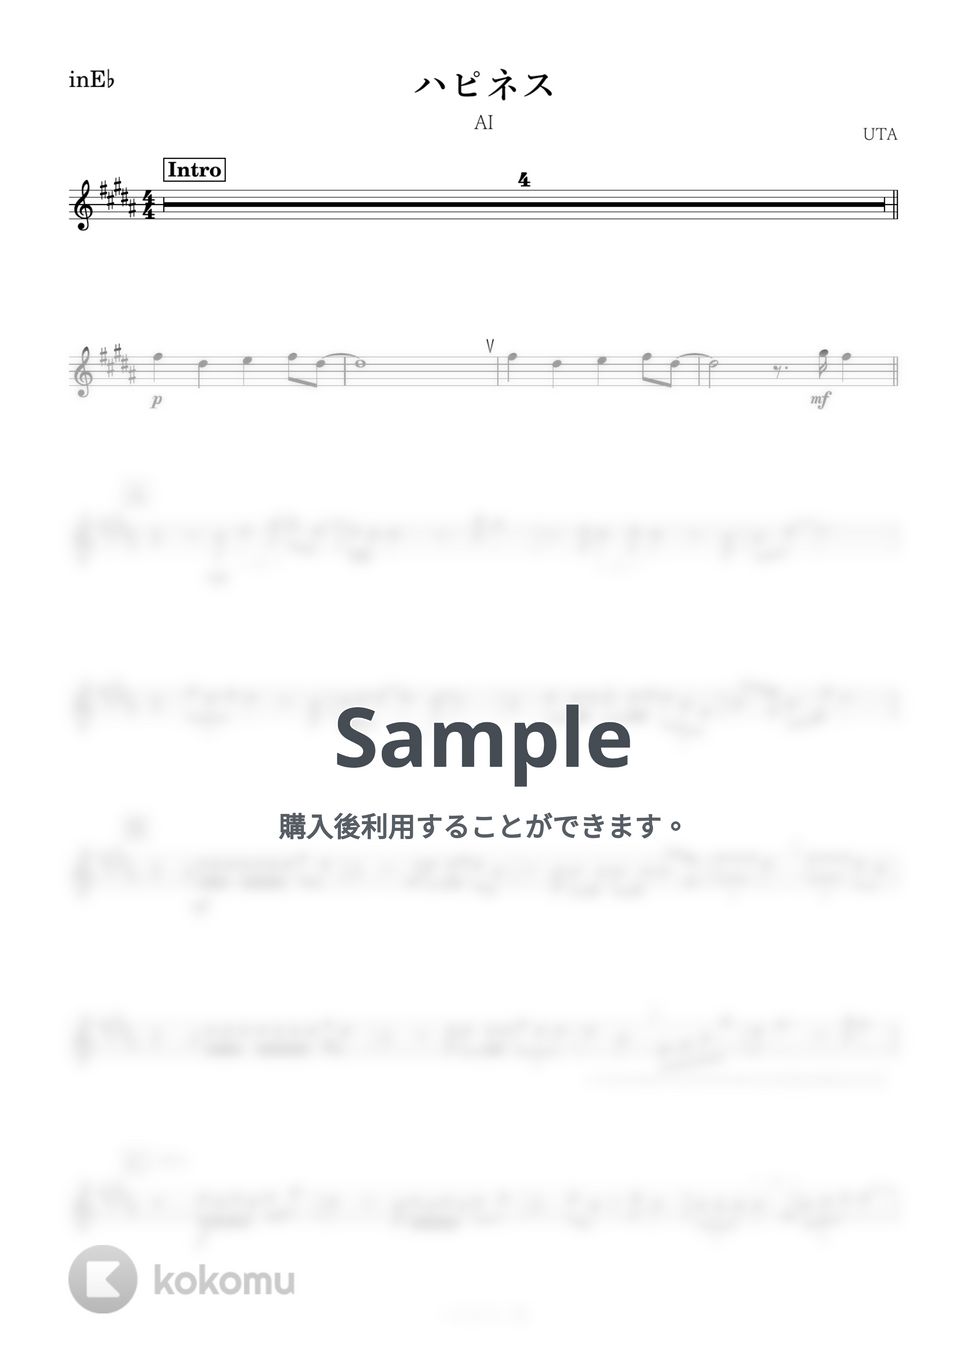 AI - ハピネス (E♭) by kanamusic